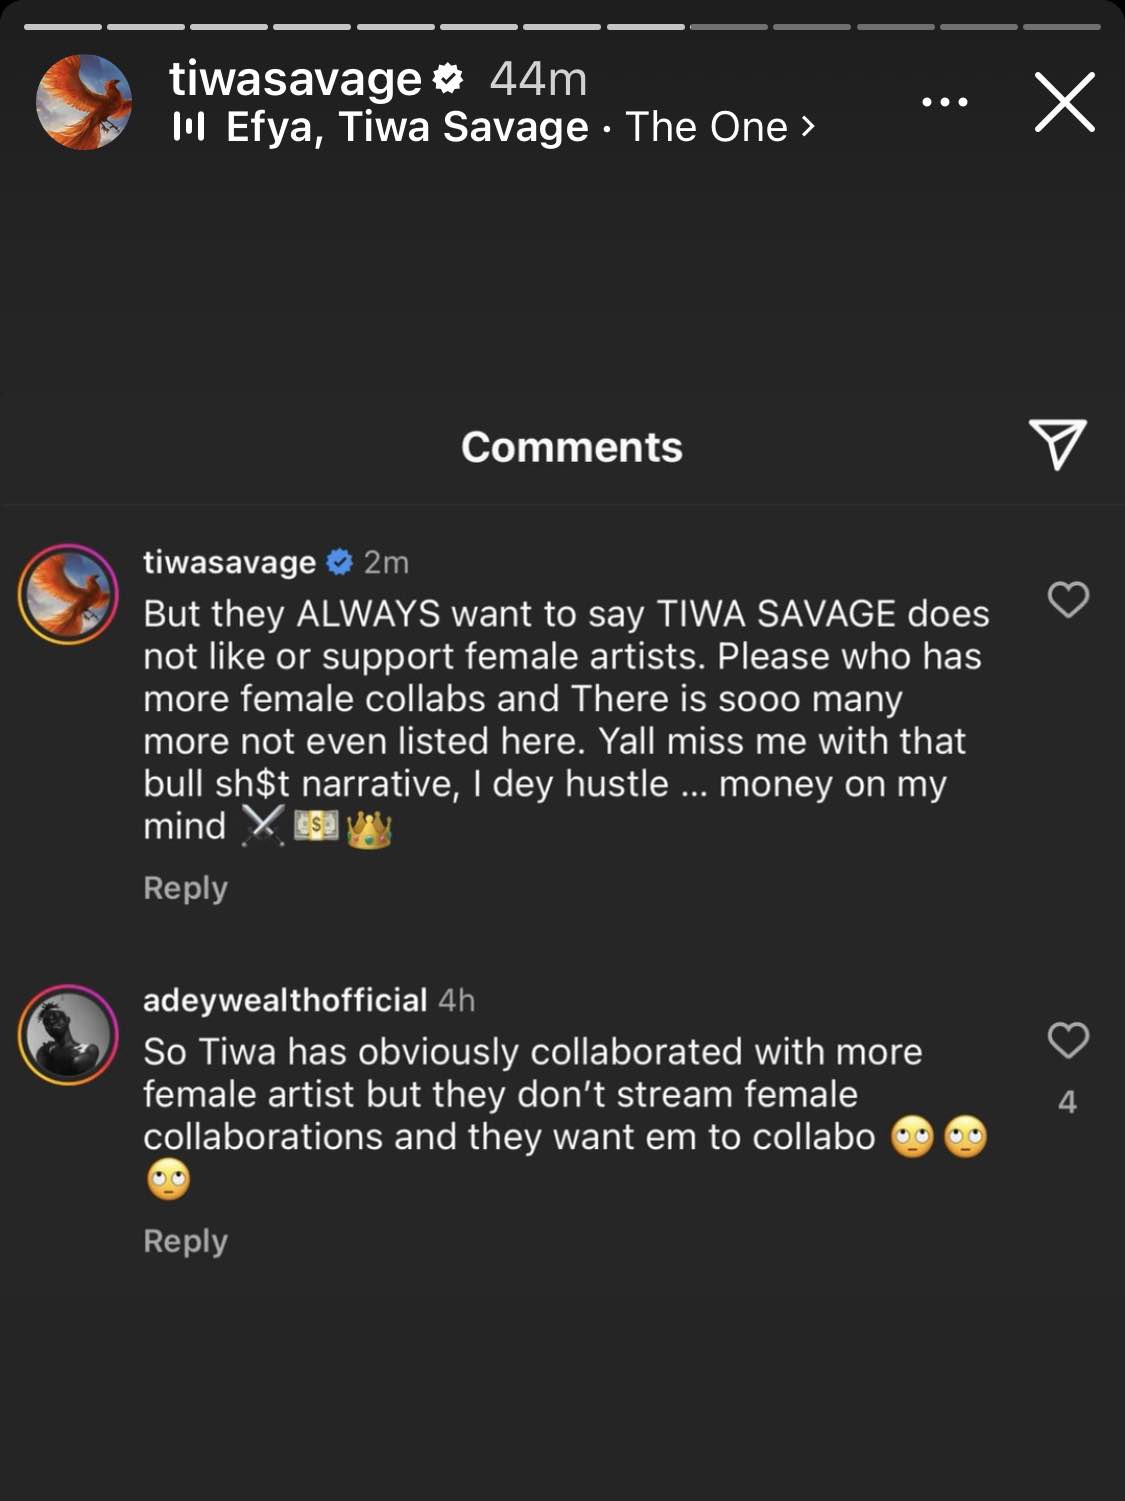 Tiwa Savage shuts down rumors regarding not supporting female artists